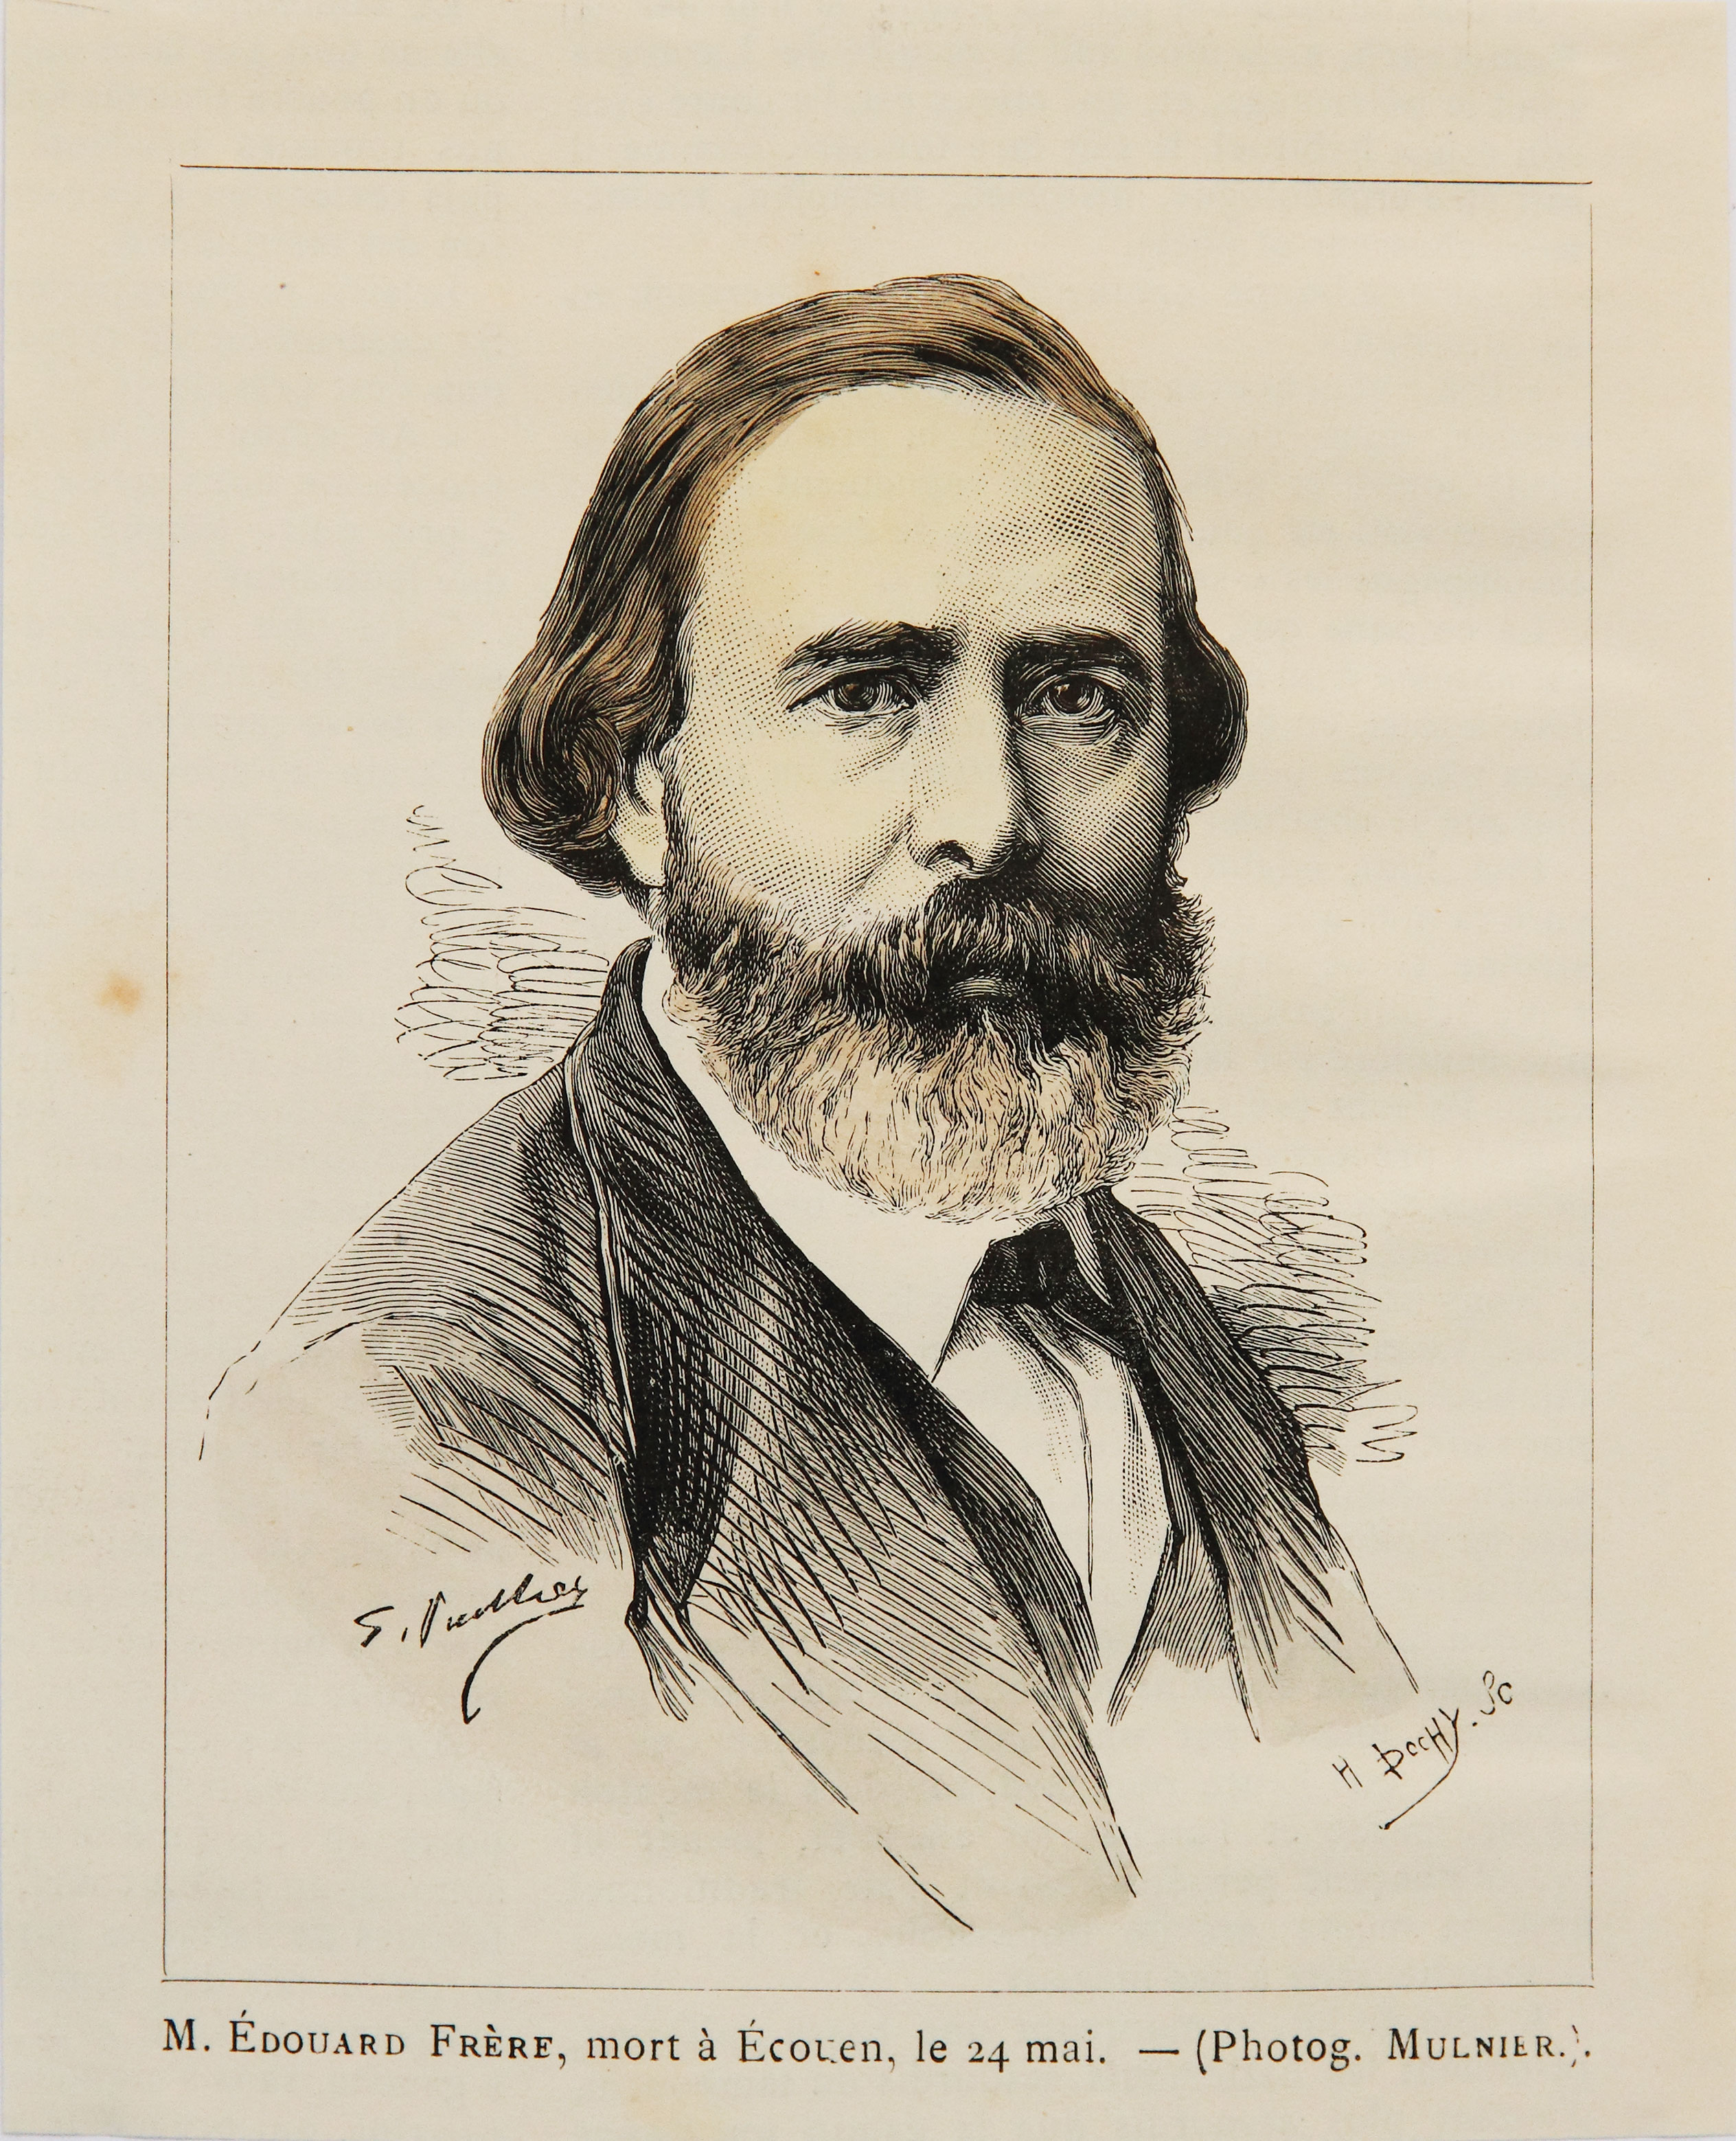 Pierre Edouard Frere